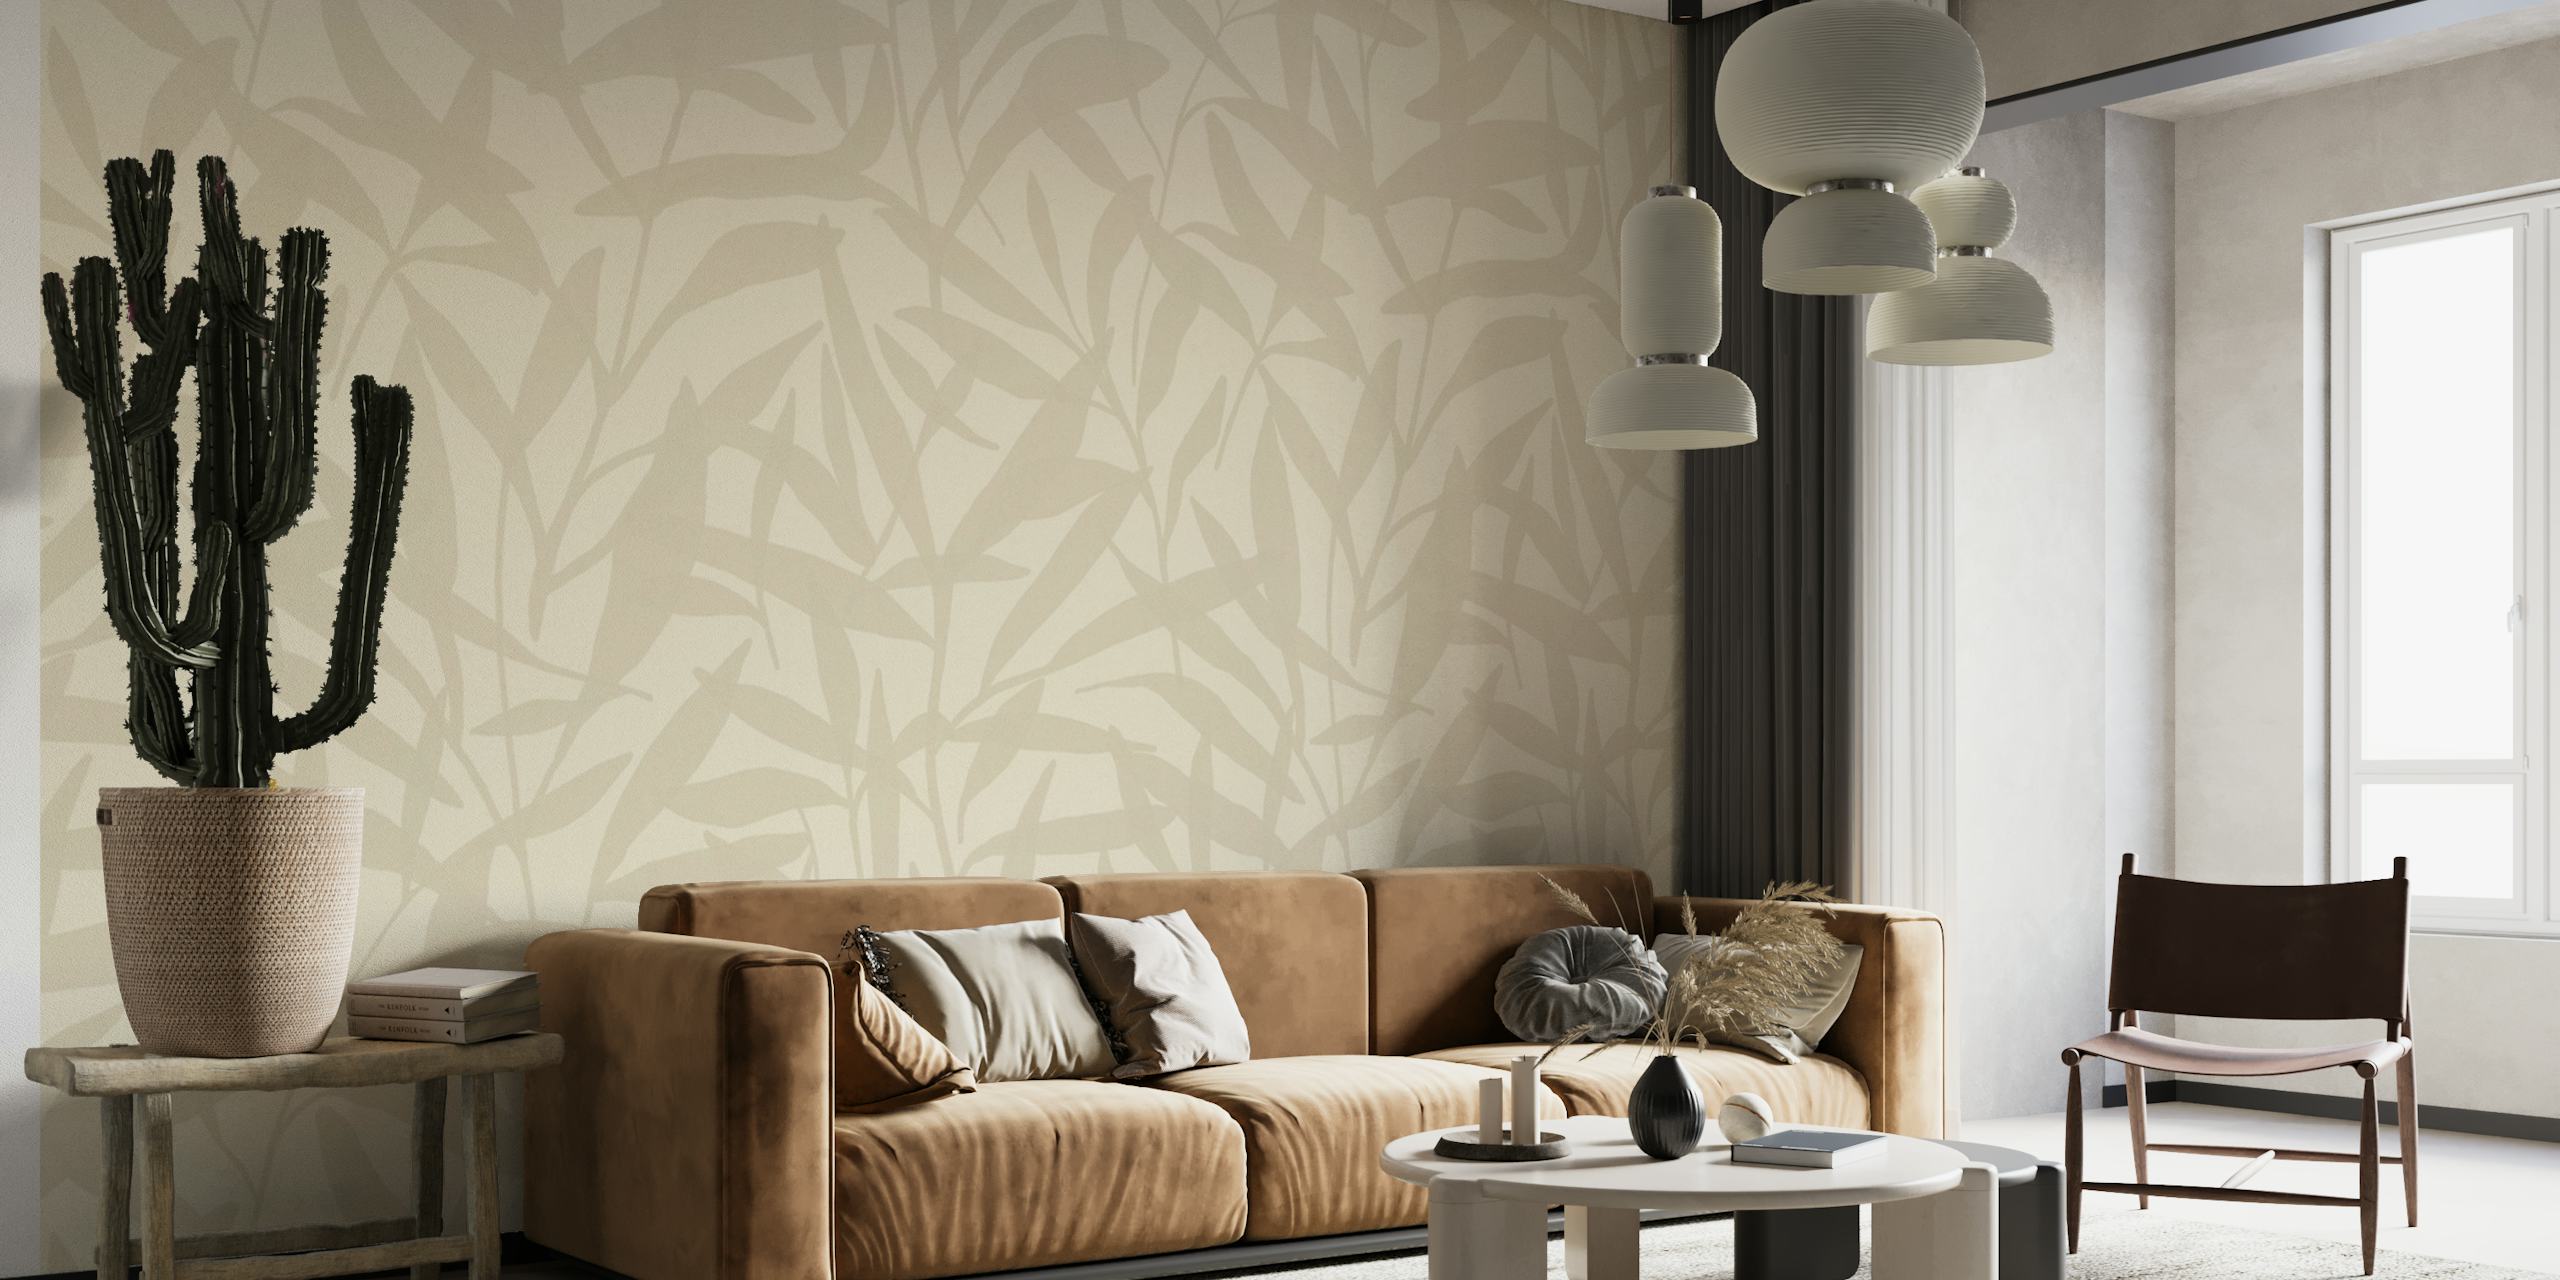 Neutral beige wall mural with an organic interwoven pattern design